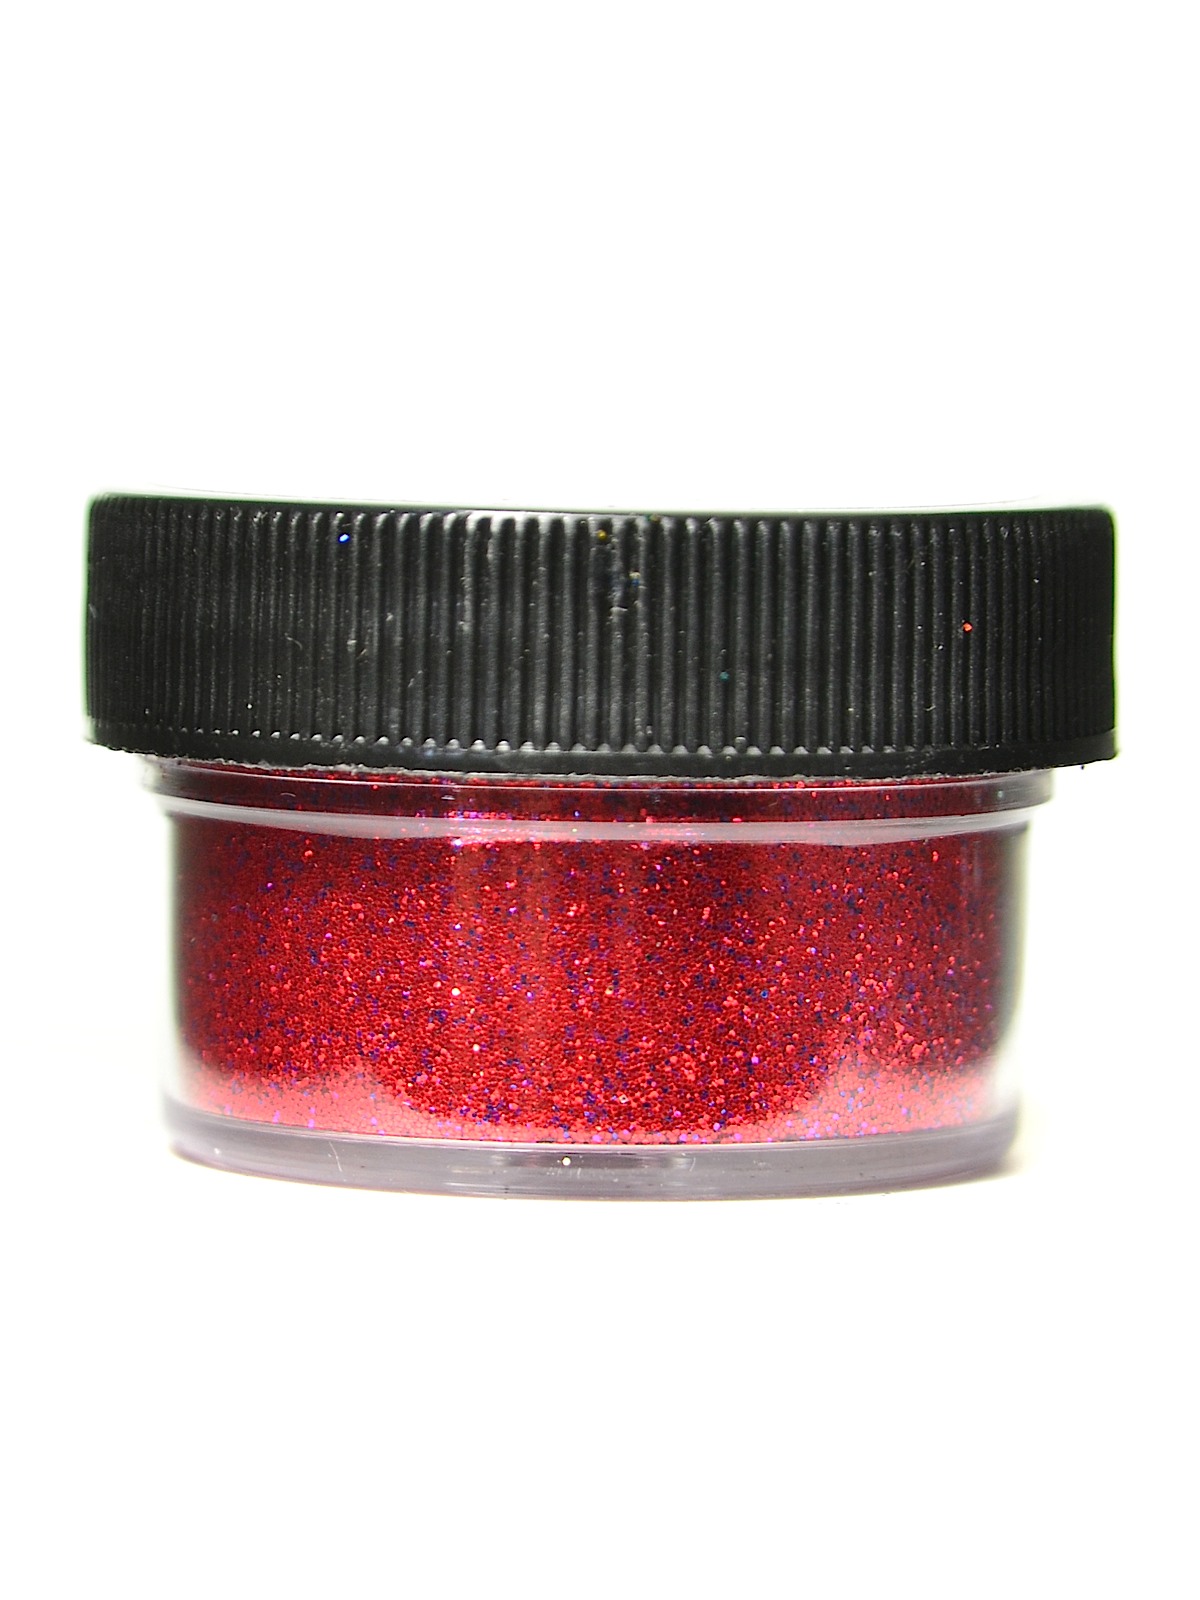 Ultrafine Opaque Glitter Cranberry 1 2 Oz. Jar